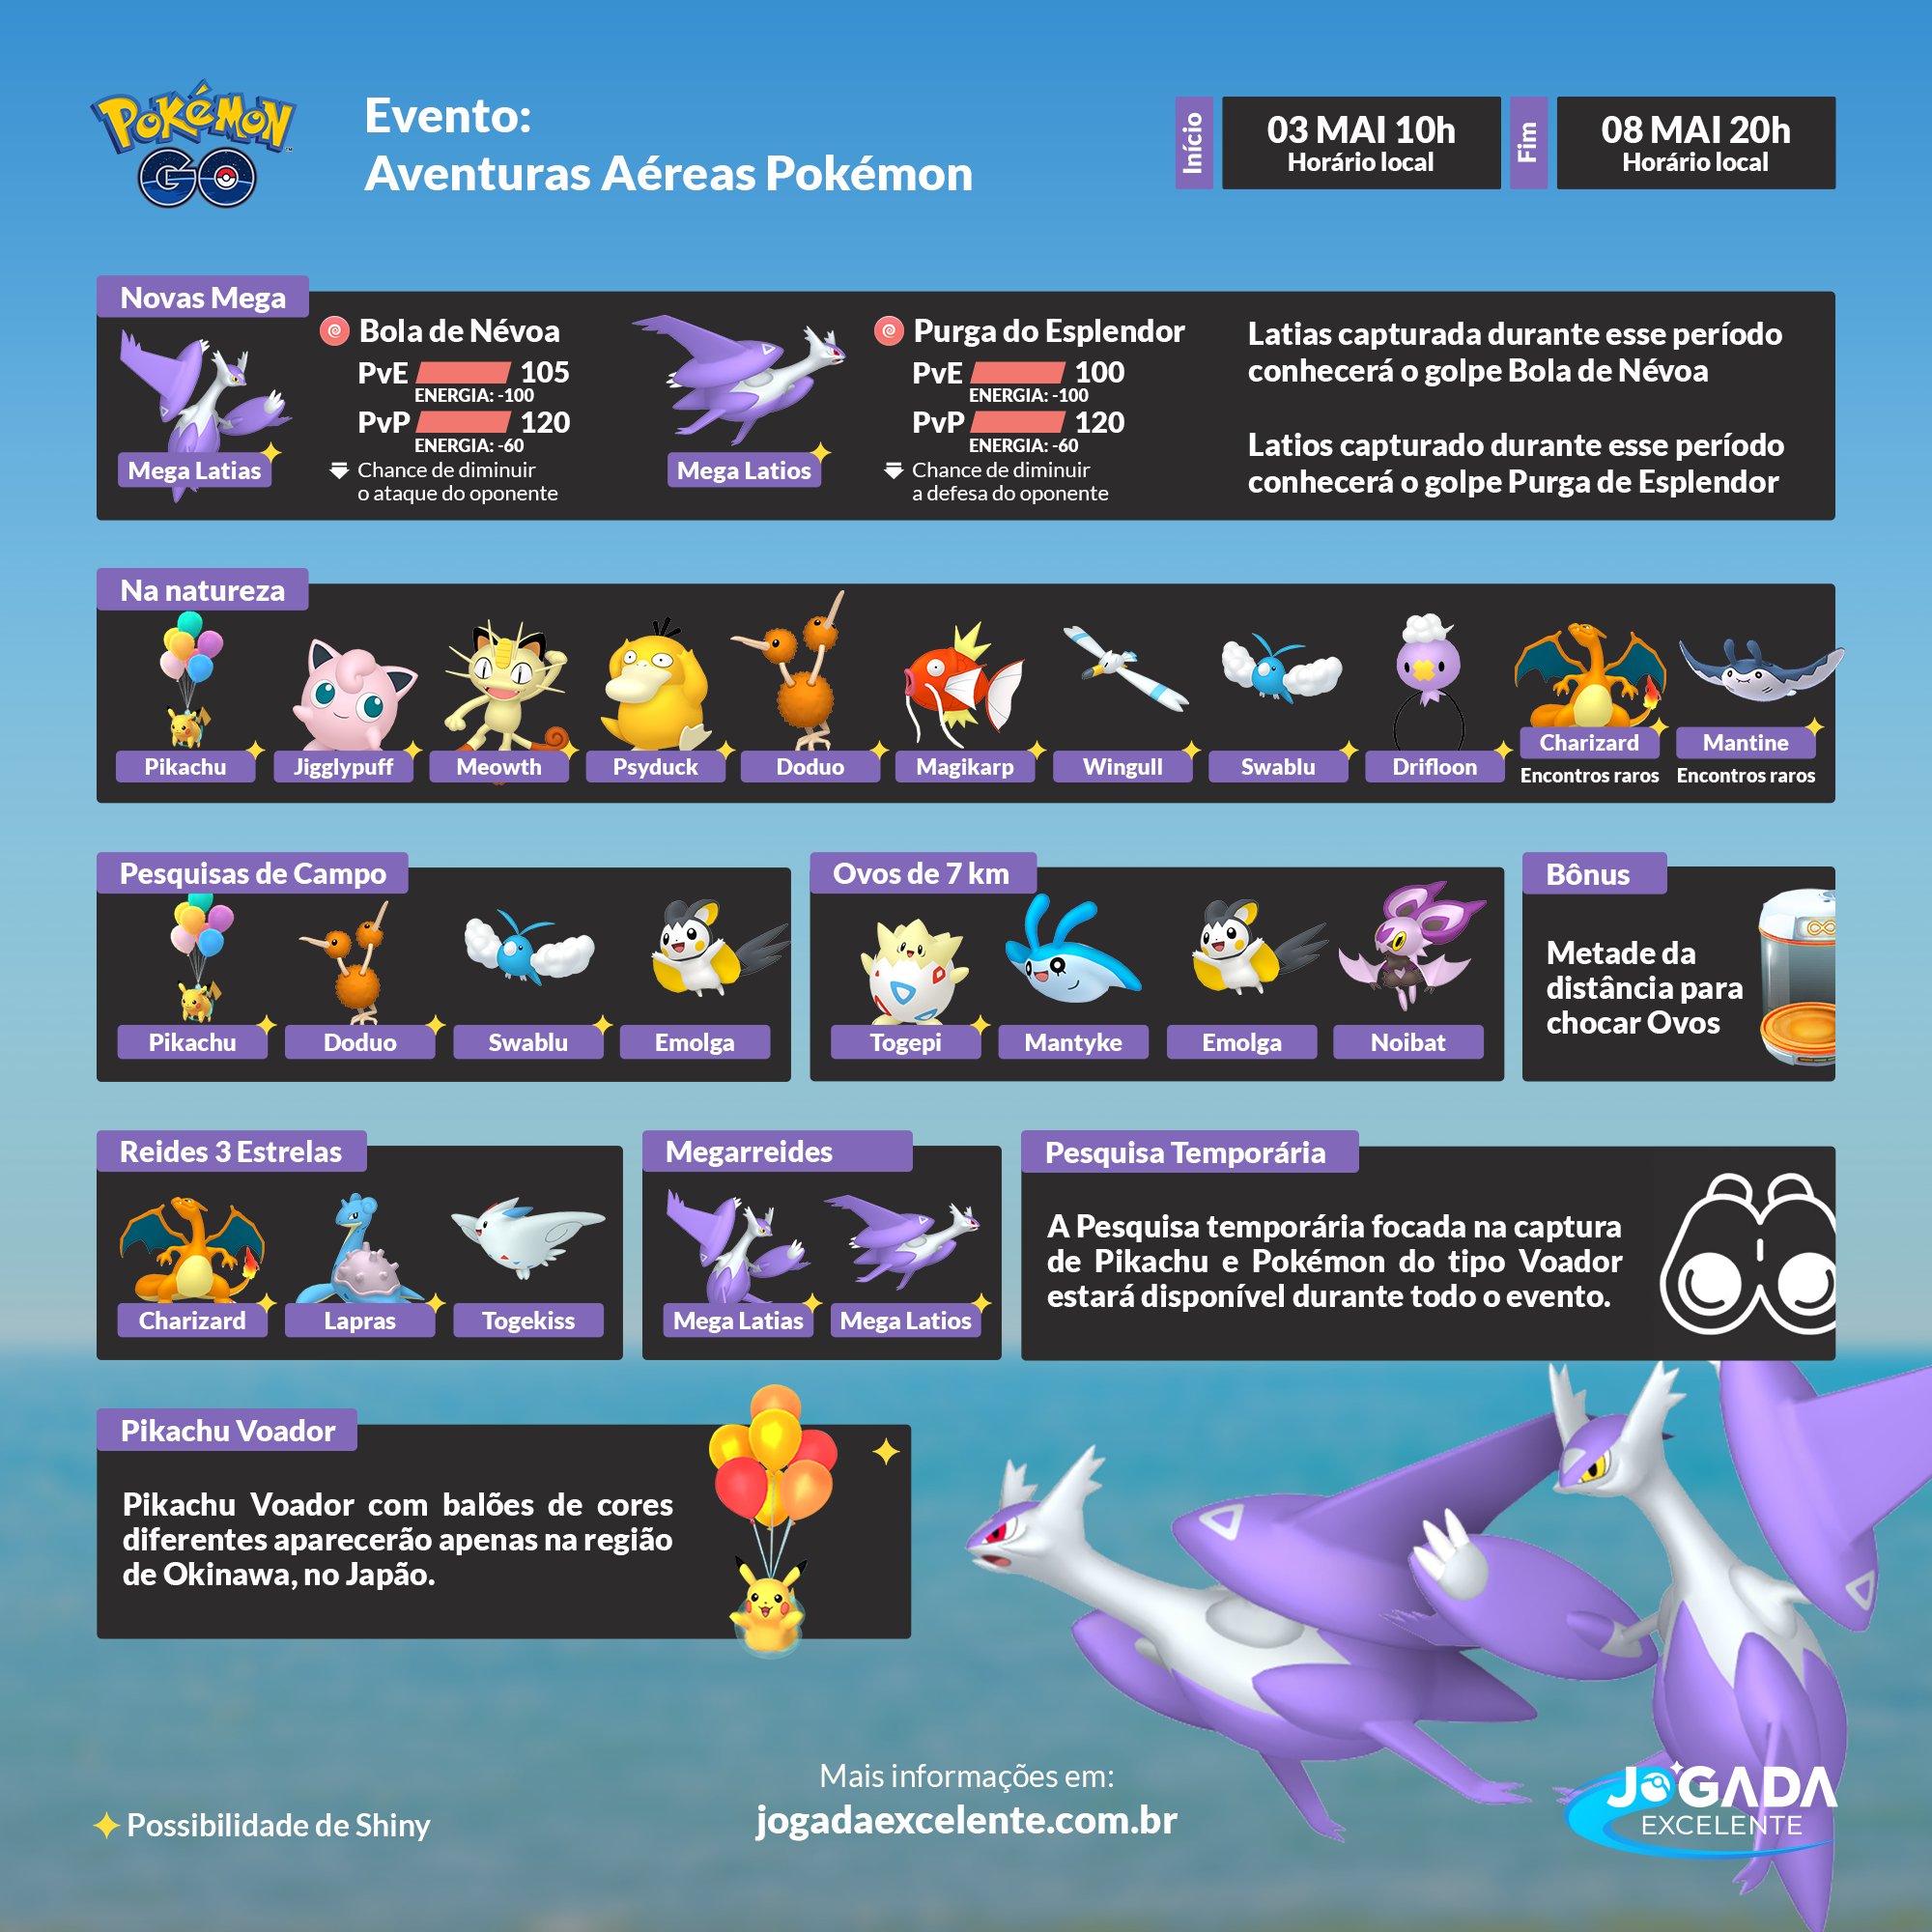 PokeNav Brasil, Auxílio na sua Jornada Pokemon: Tipos, vantagens e